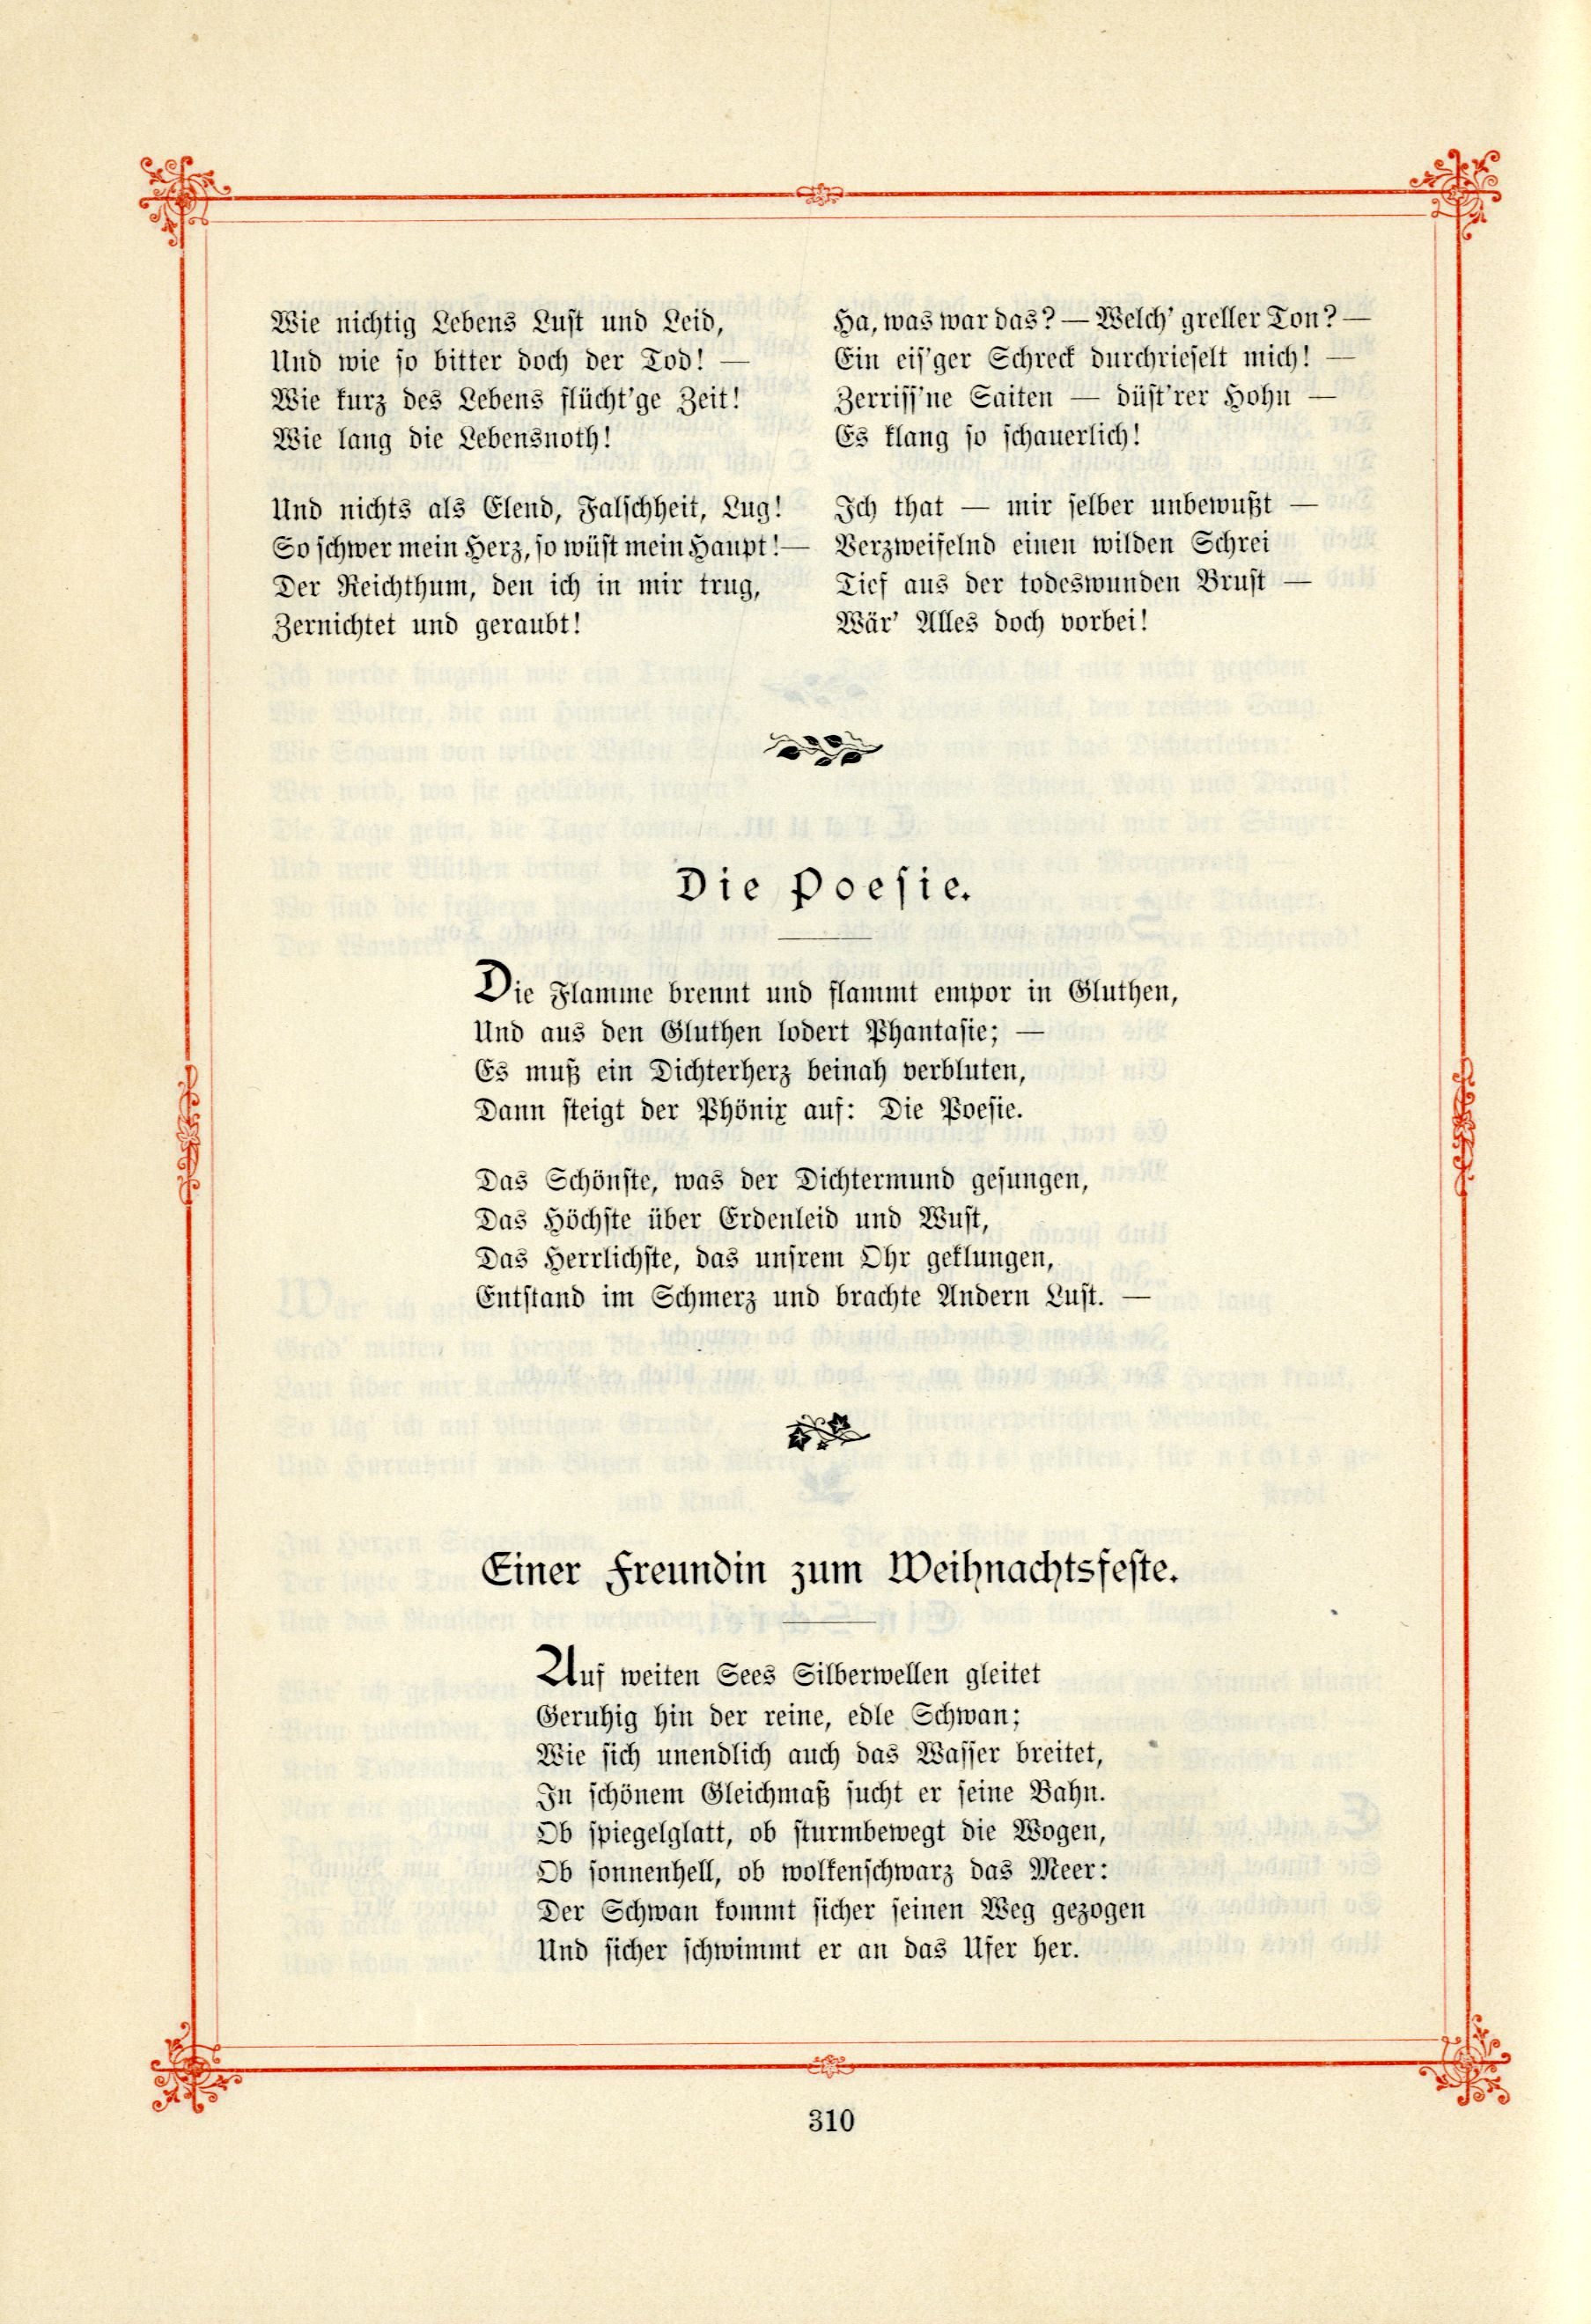 Die Poesie (1895) | 1. (310) Main body of text